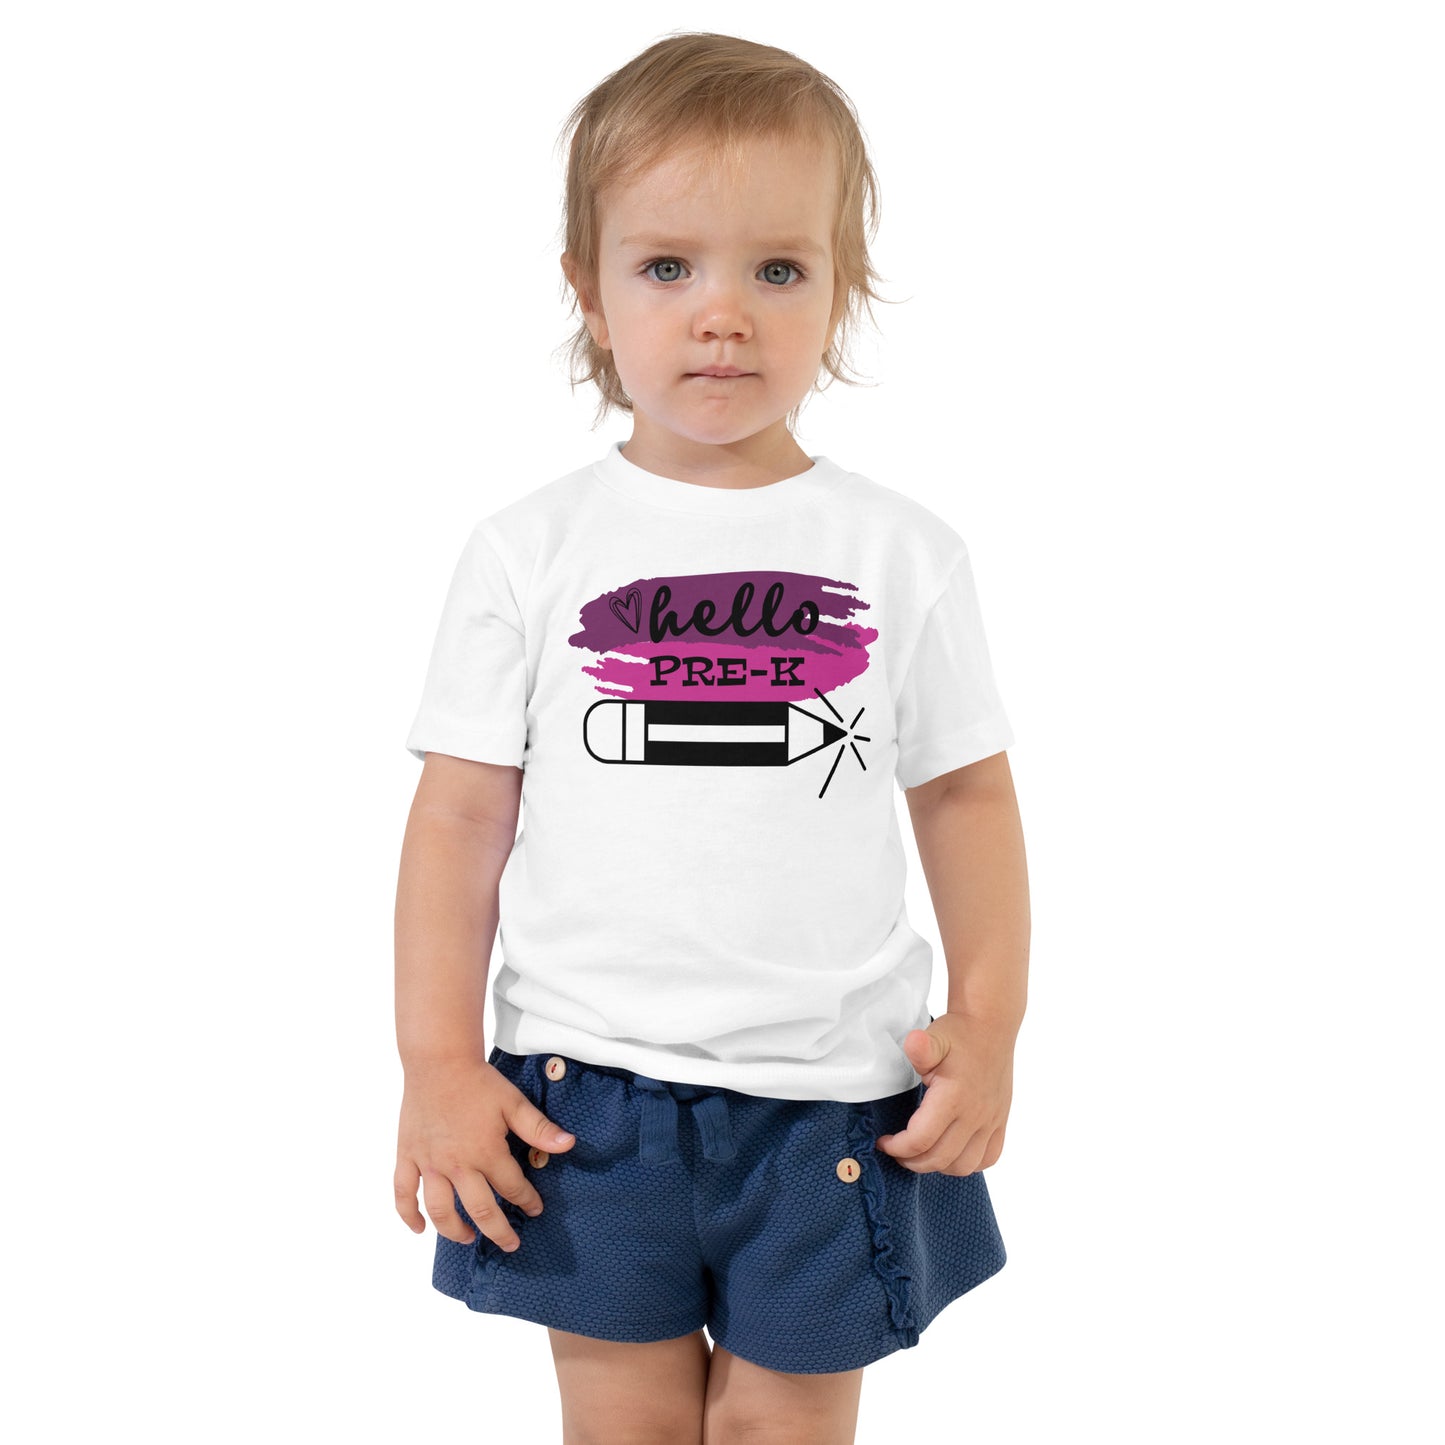 Hello Pre-K Pink Toddler Short Sleeve T-Shirt